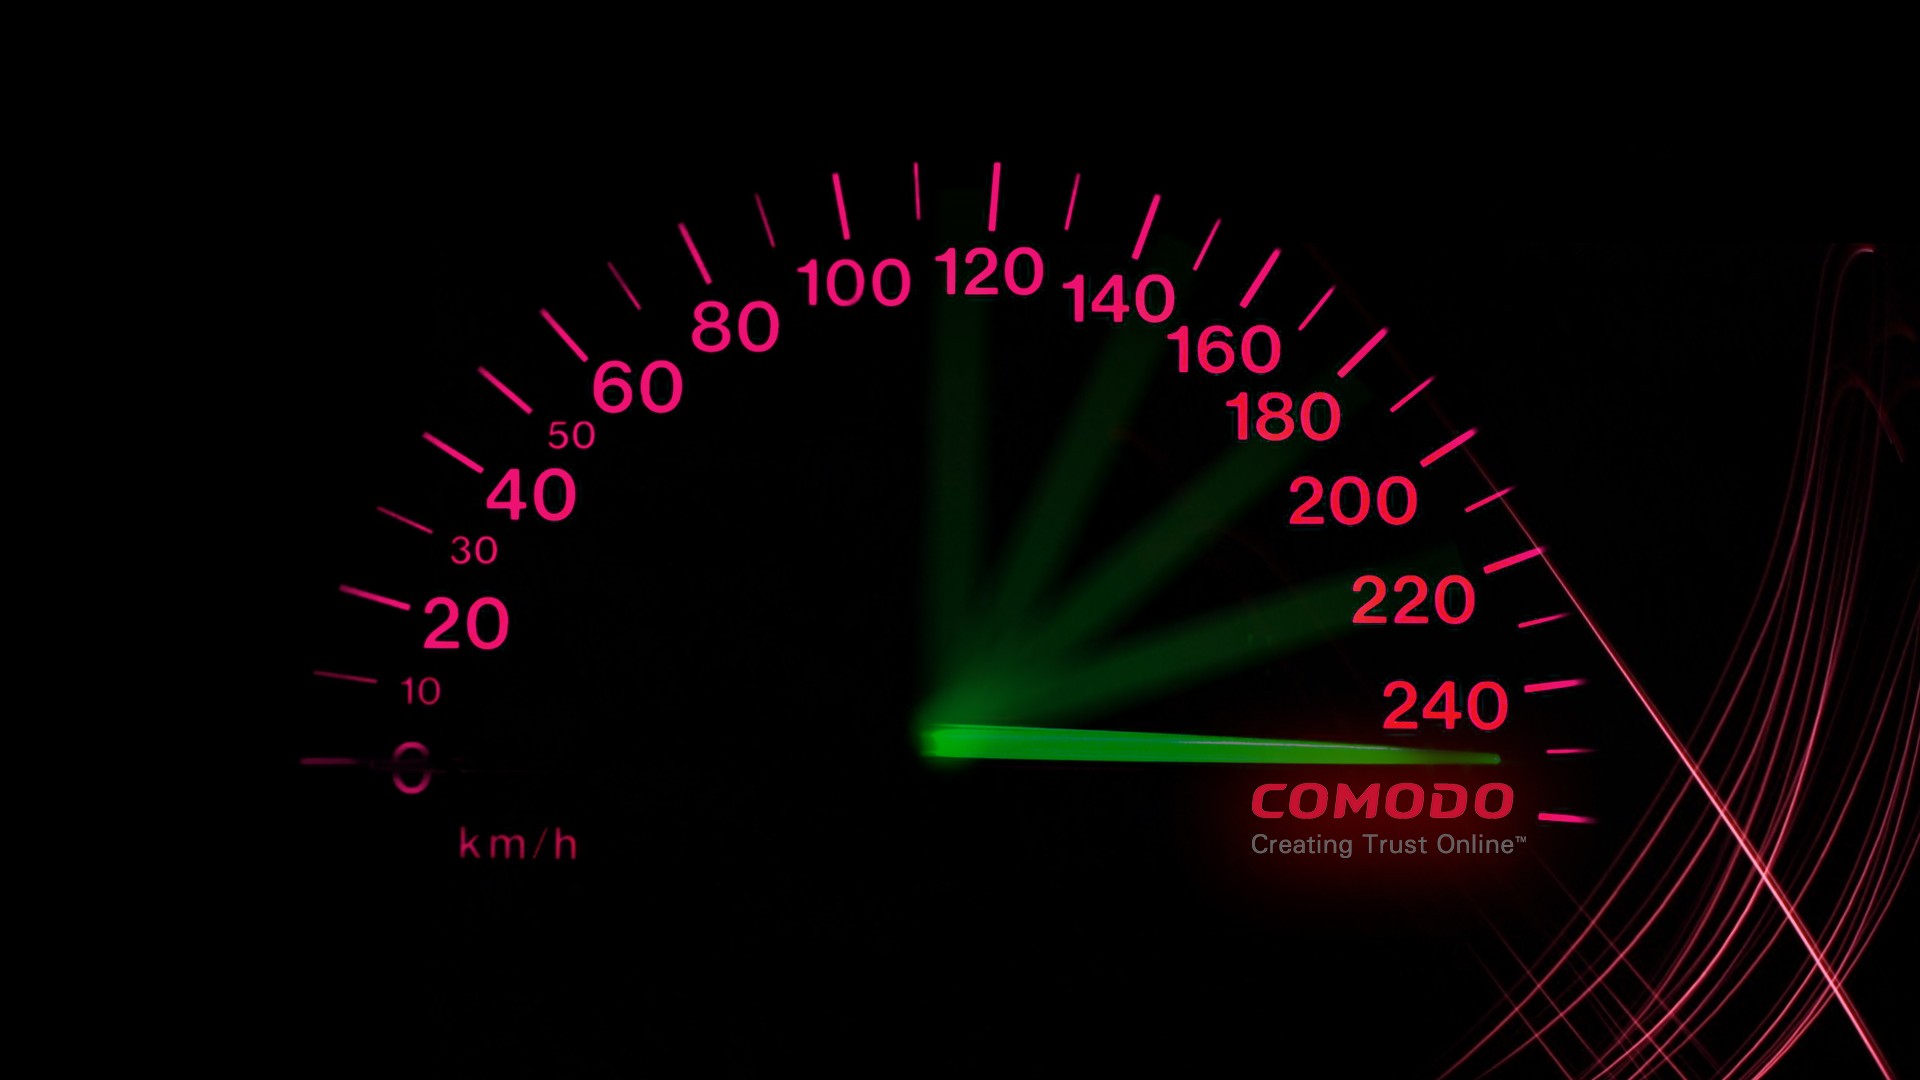 COMODO Internet Trust Online Speedometer 1920x1080